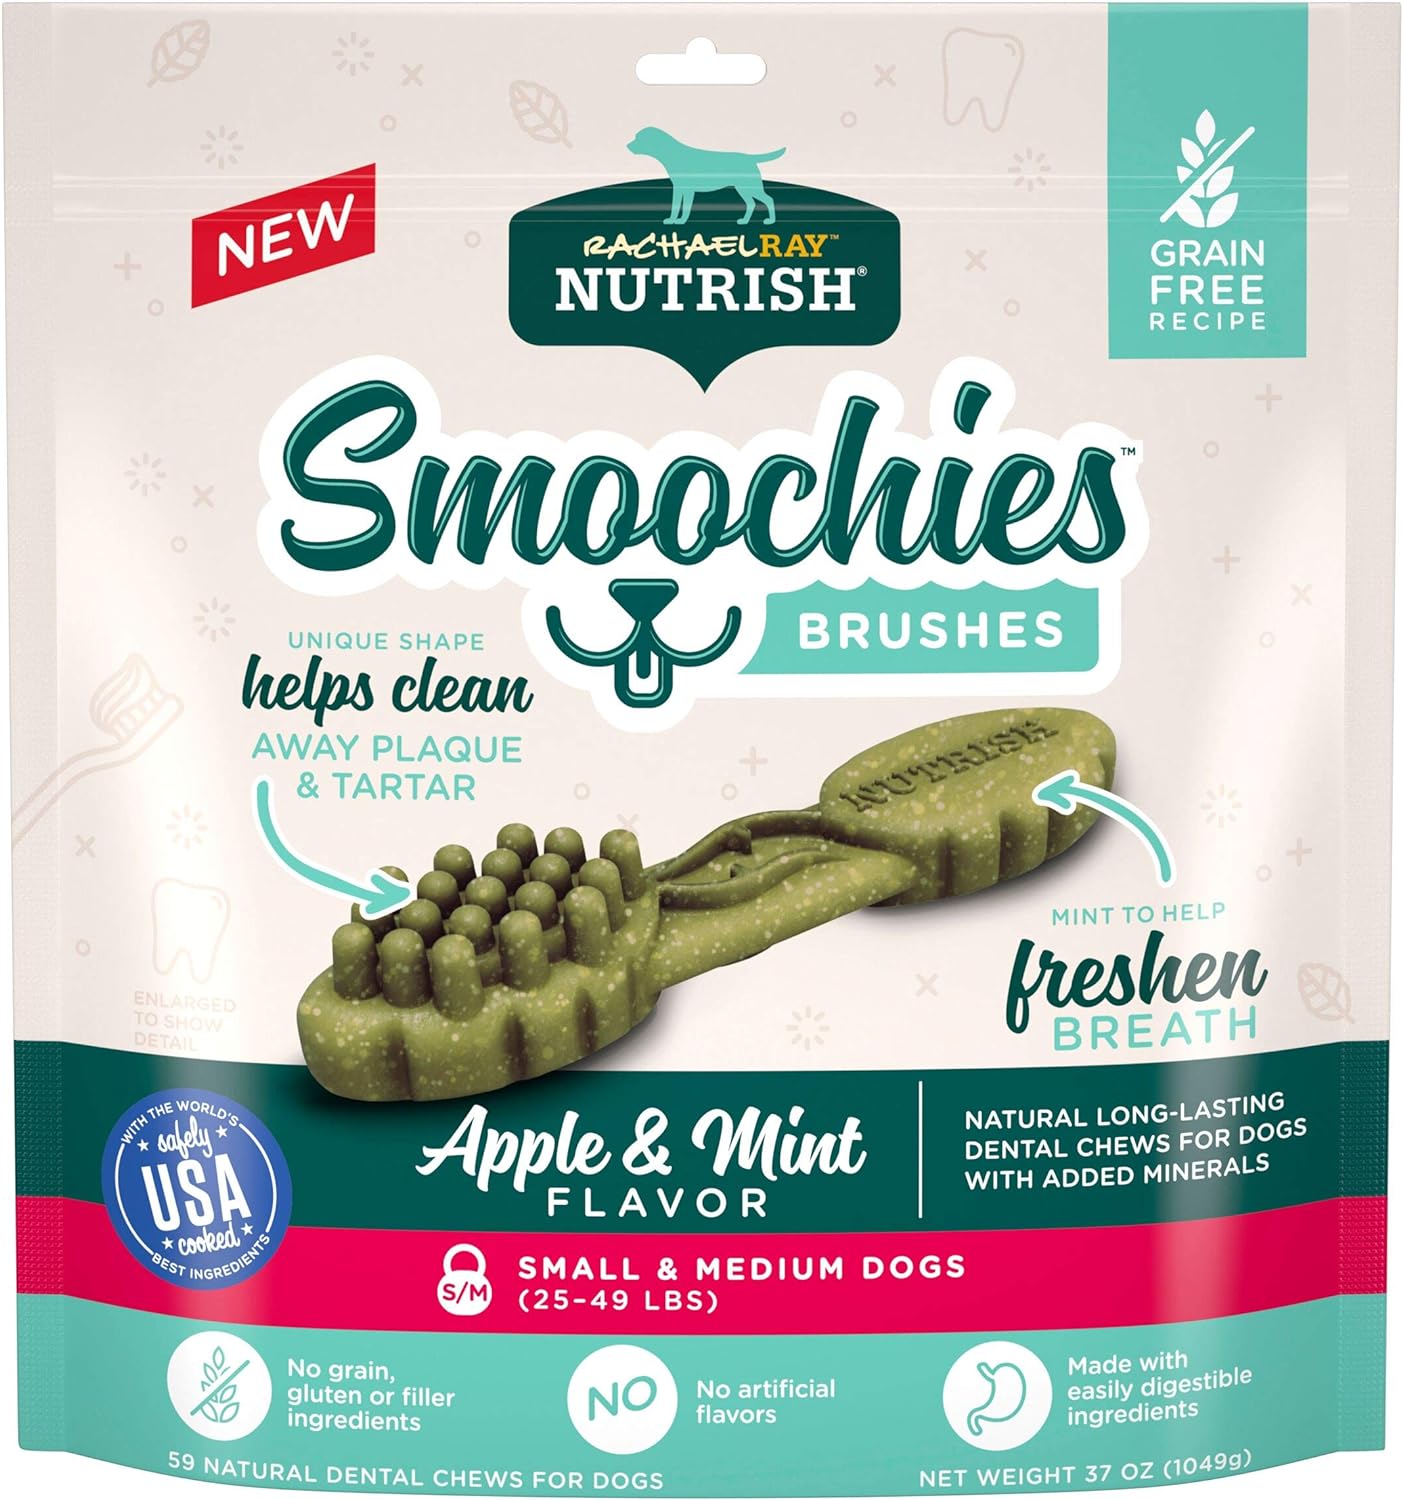 Rachael Ray Nutrish Smoochies Brushes Natural Long Lasting Dog Dental Chews, Apple & Mint, Small/Medium Size, 59 Treats, Grain Free